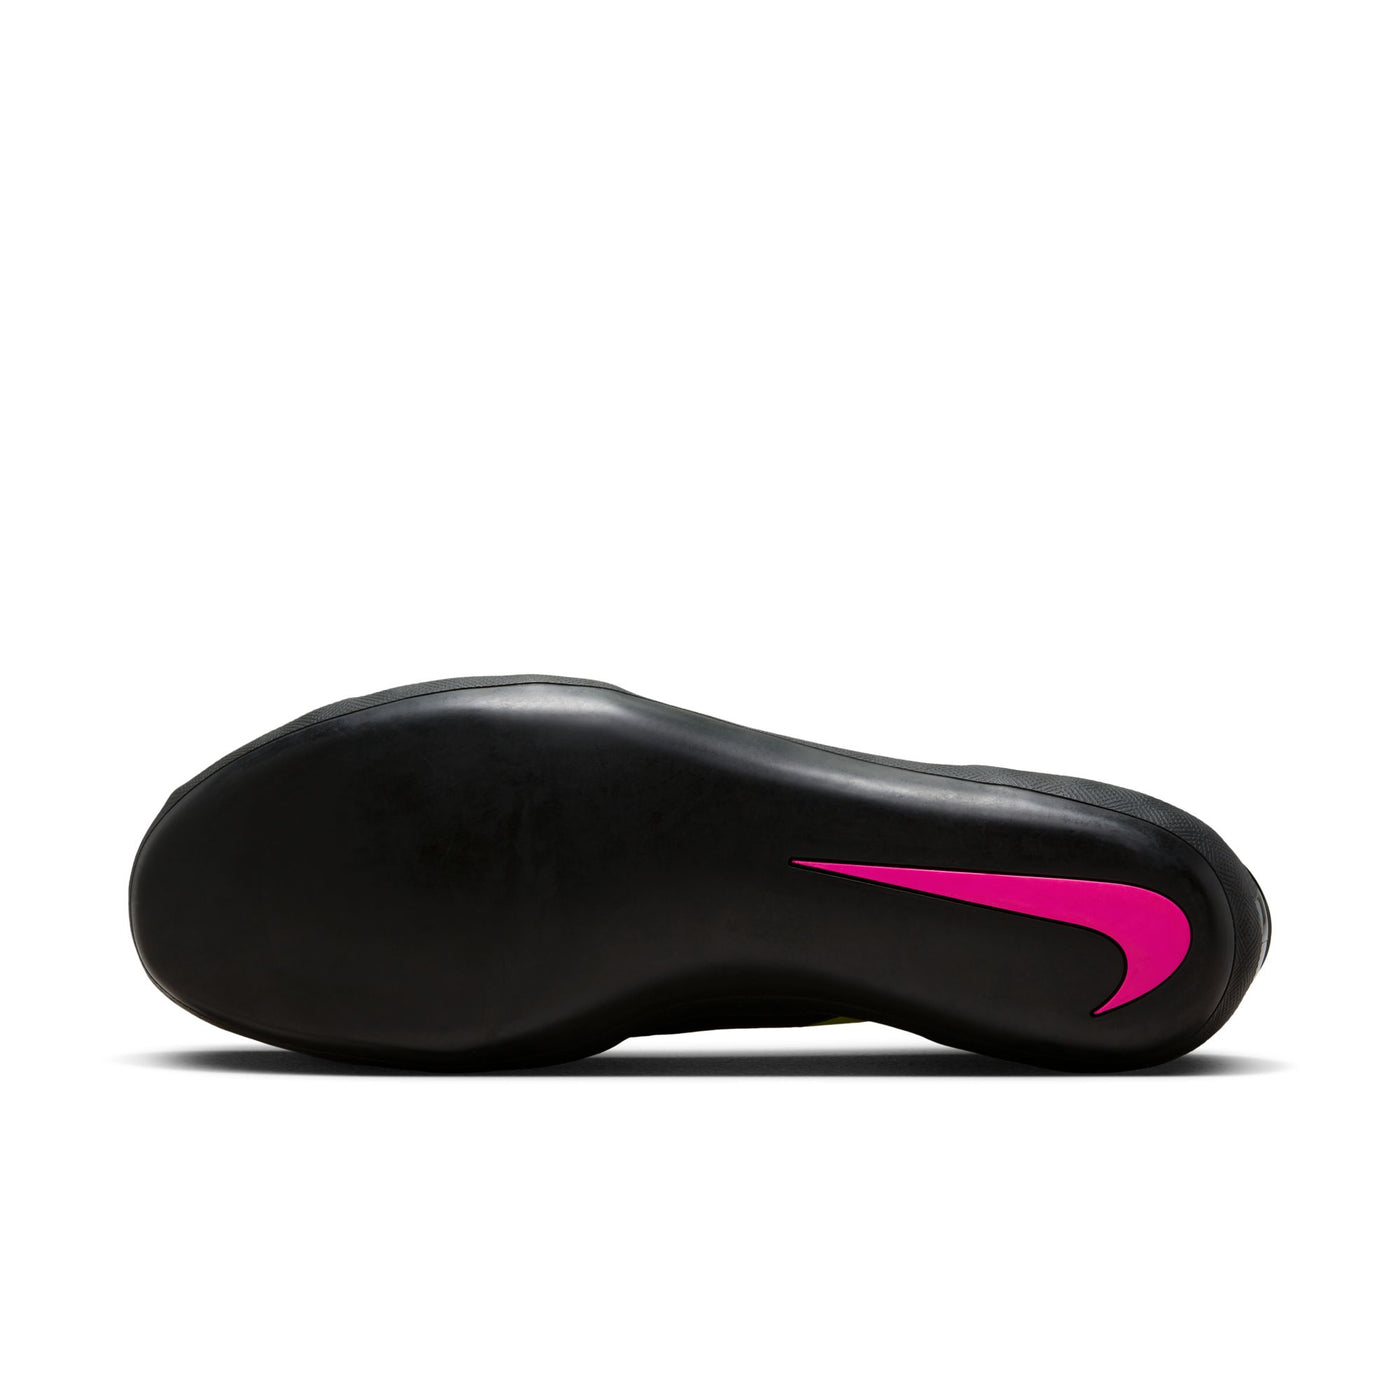 Unisex Nike Zoom Rotational 6 Throwing Shoe - 685131-004